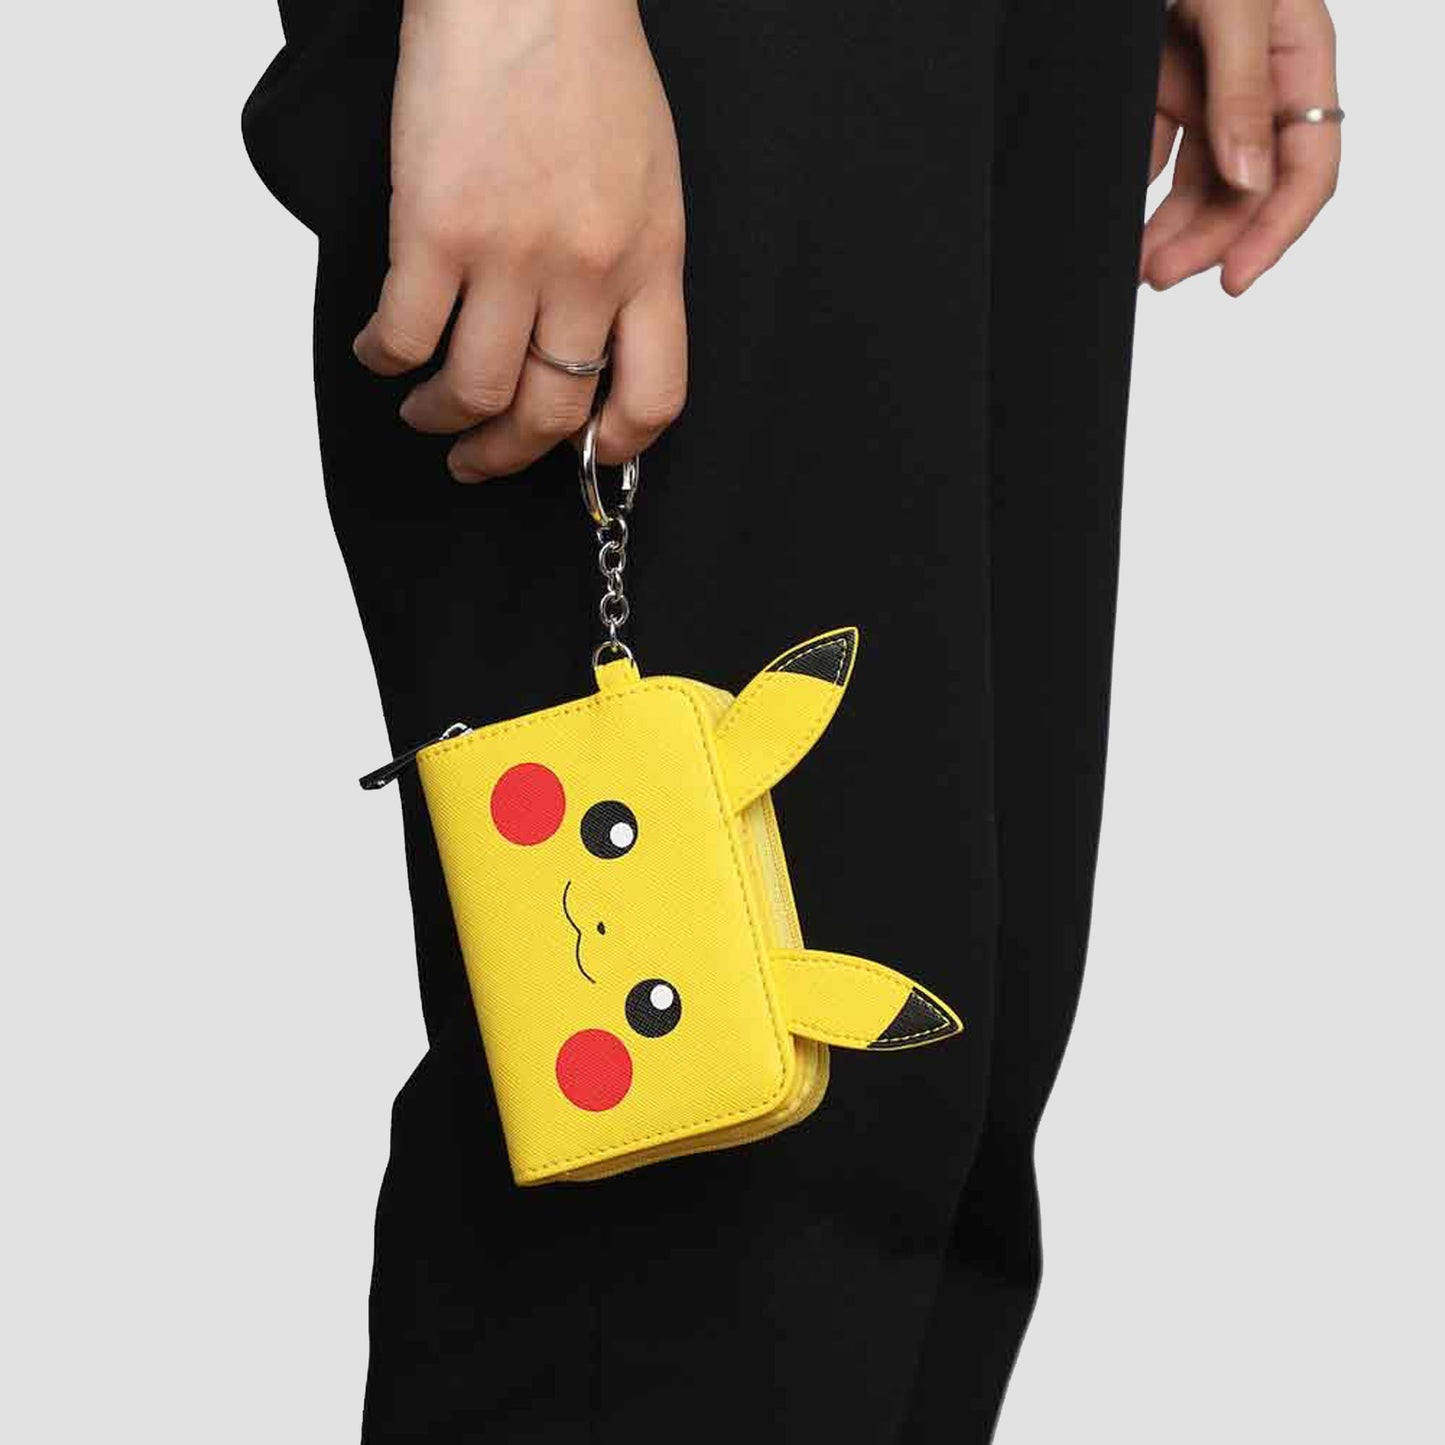 Loungefly Pokemon Pikachu Black Zip Around Wallet 